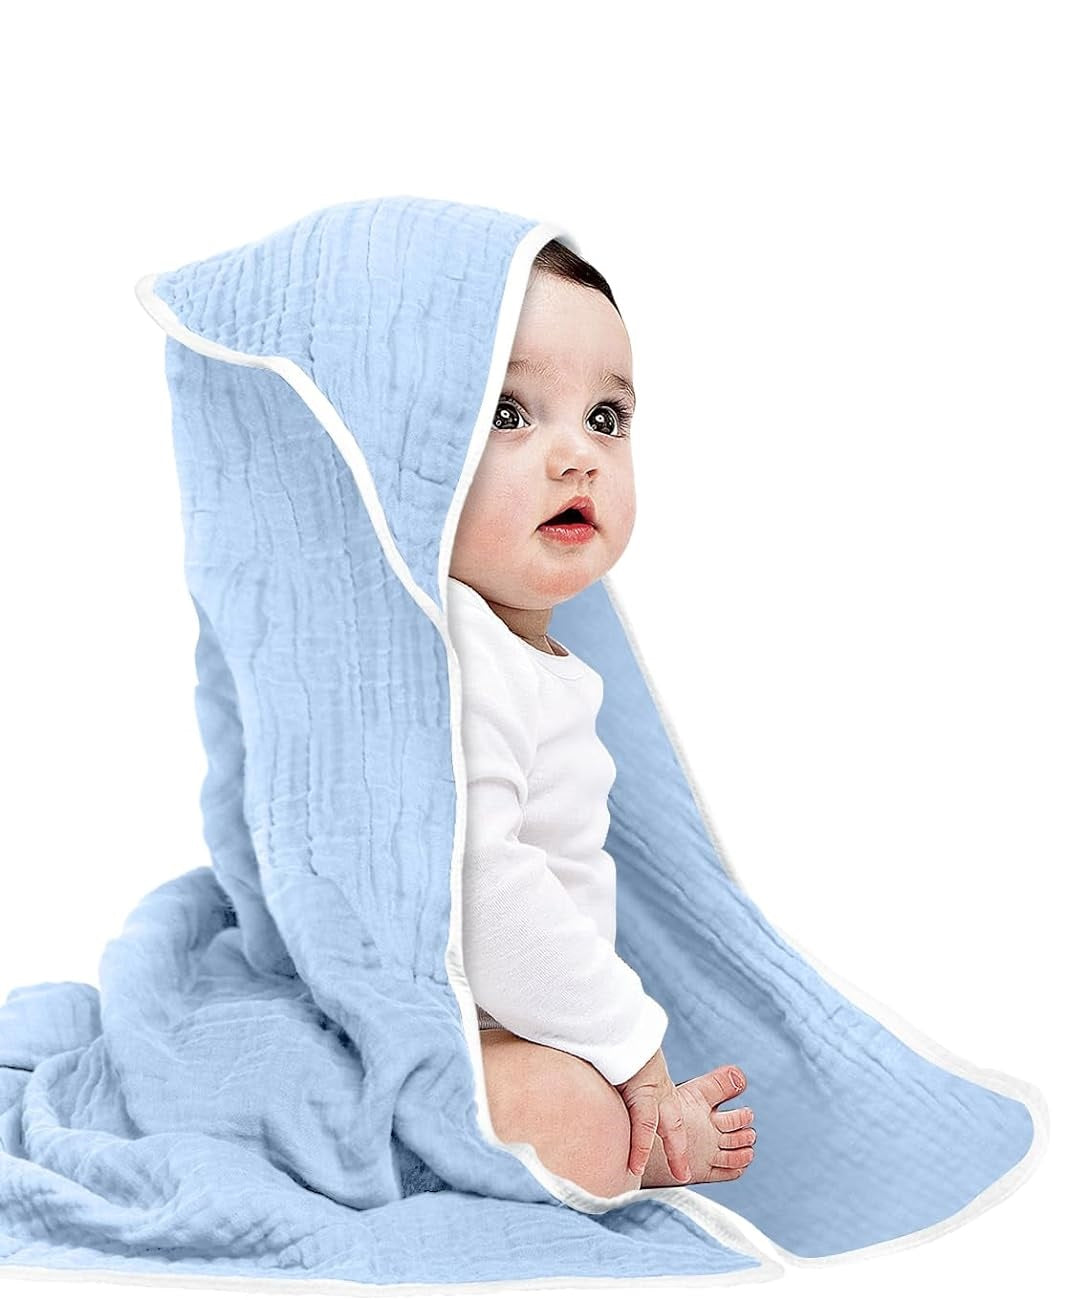 Toddler Baby Hooded Towel 100% Cotton Soft Newborn Kids Bathrobe Baby Towel Wrap